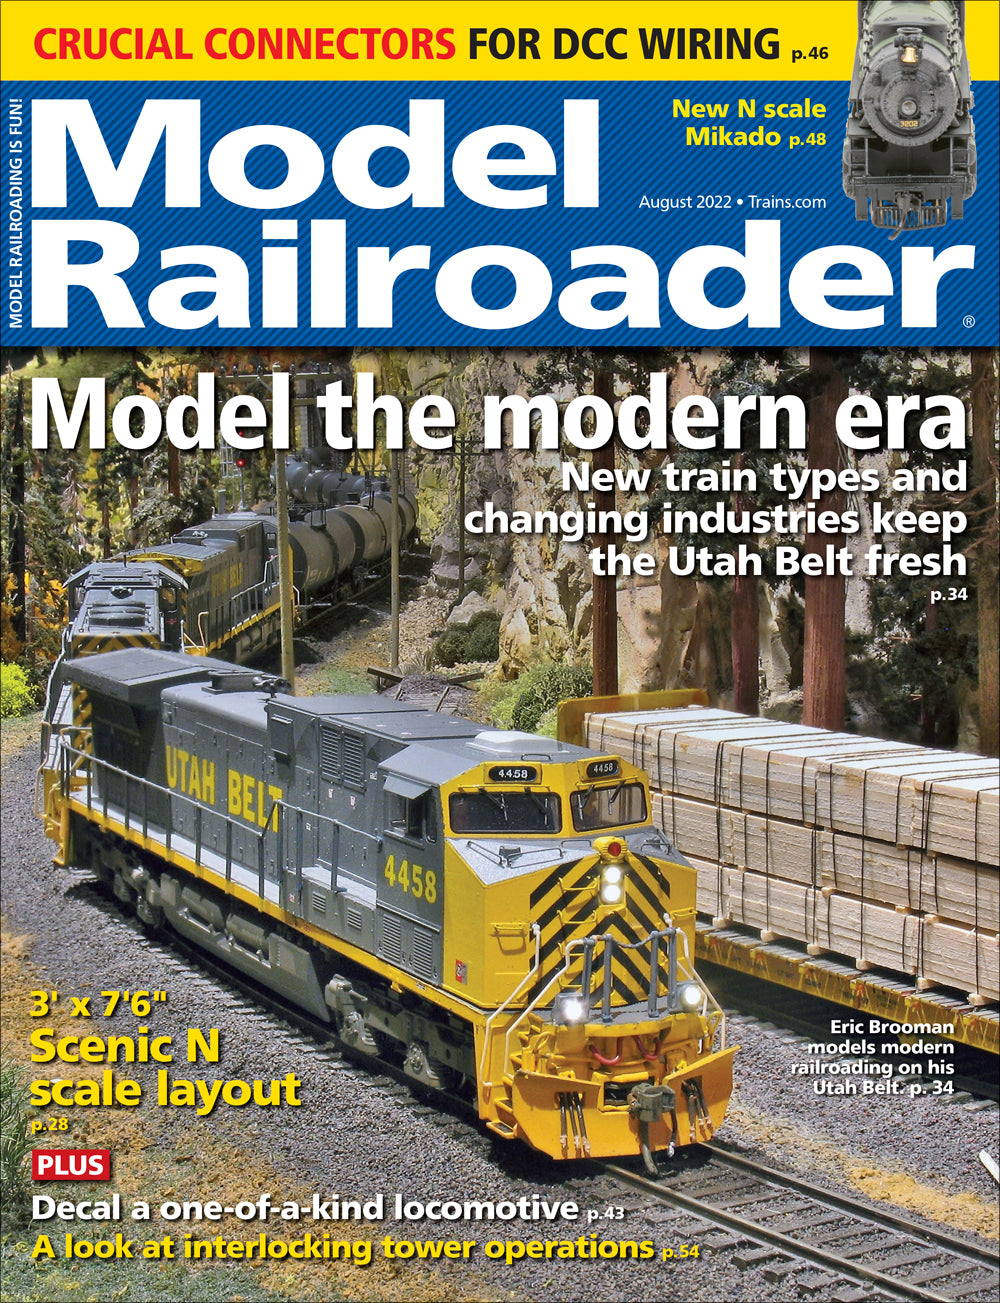 Model Railroader - Magazine - Vol. 89 - Issue 08 - Aug 2022